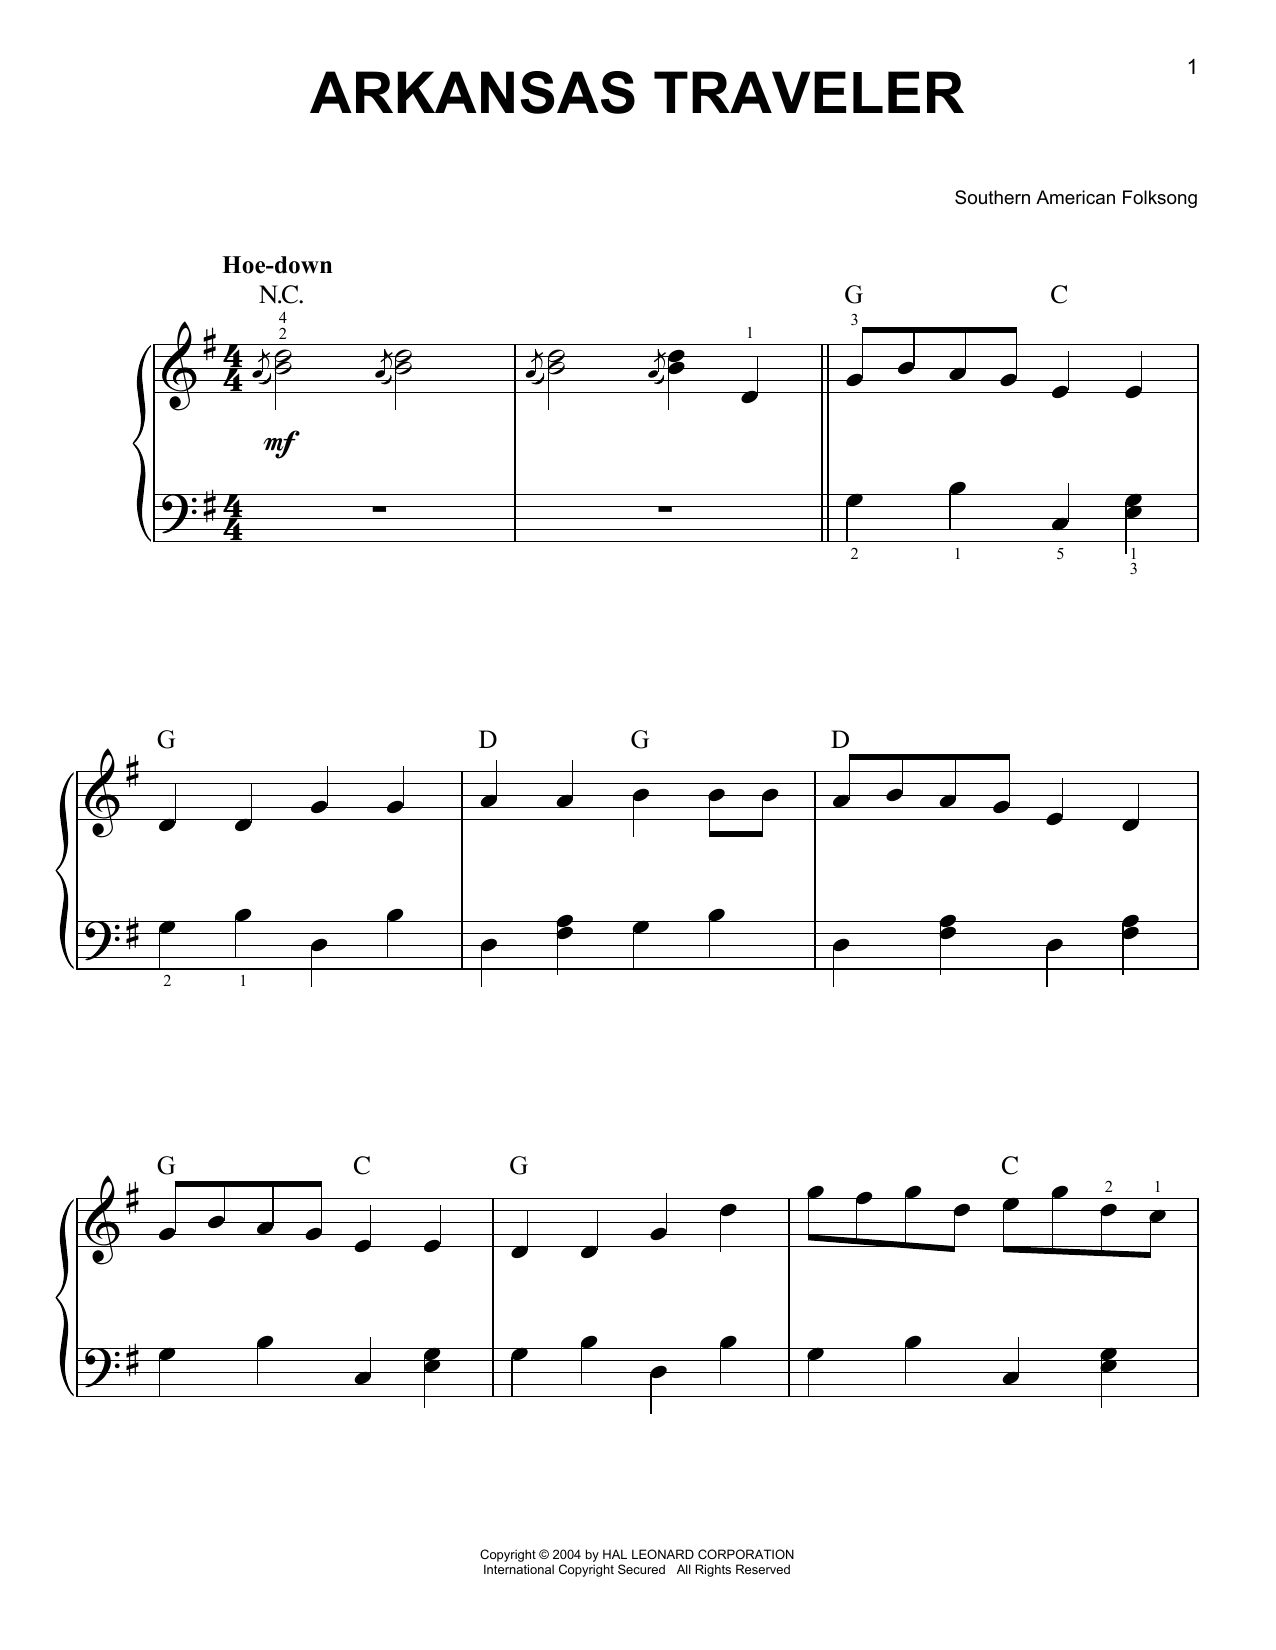 Southern American Folksong Arkansas Traveler Sheet Music Notes & Chords for Real Book – Melody, Lyrics & Chords - Download or Print PDF